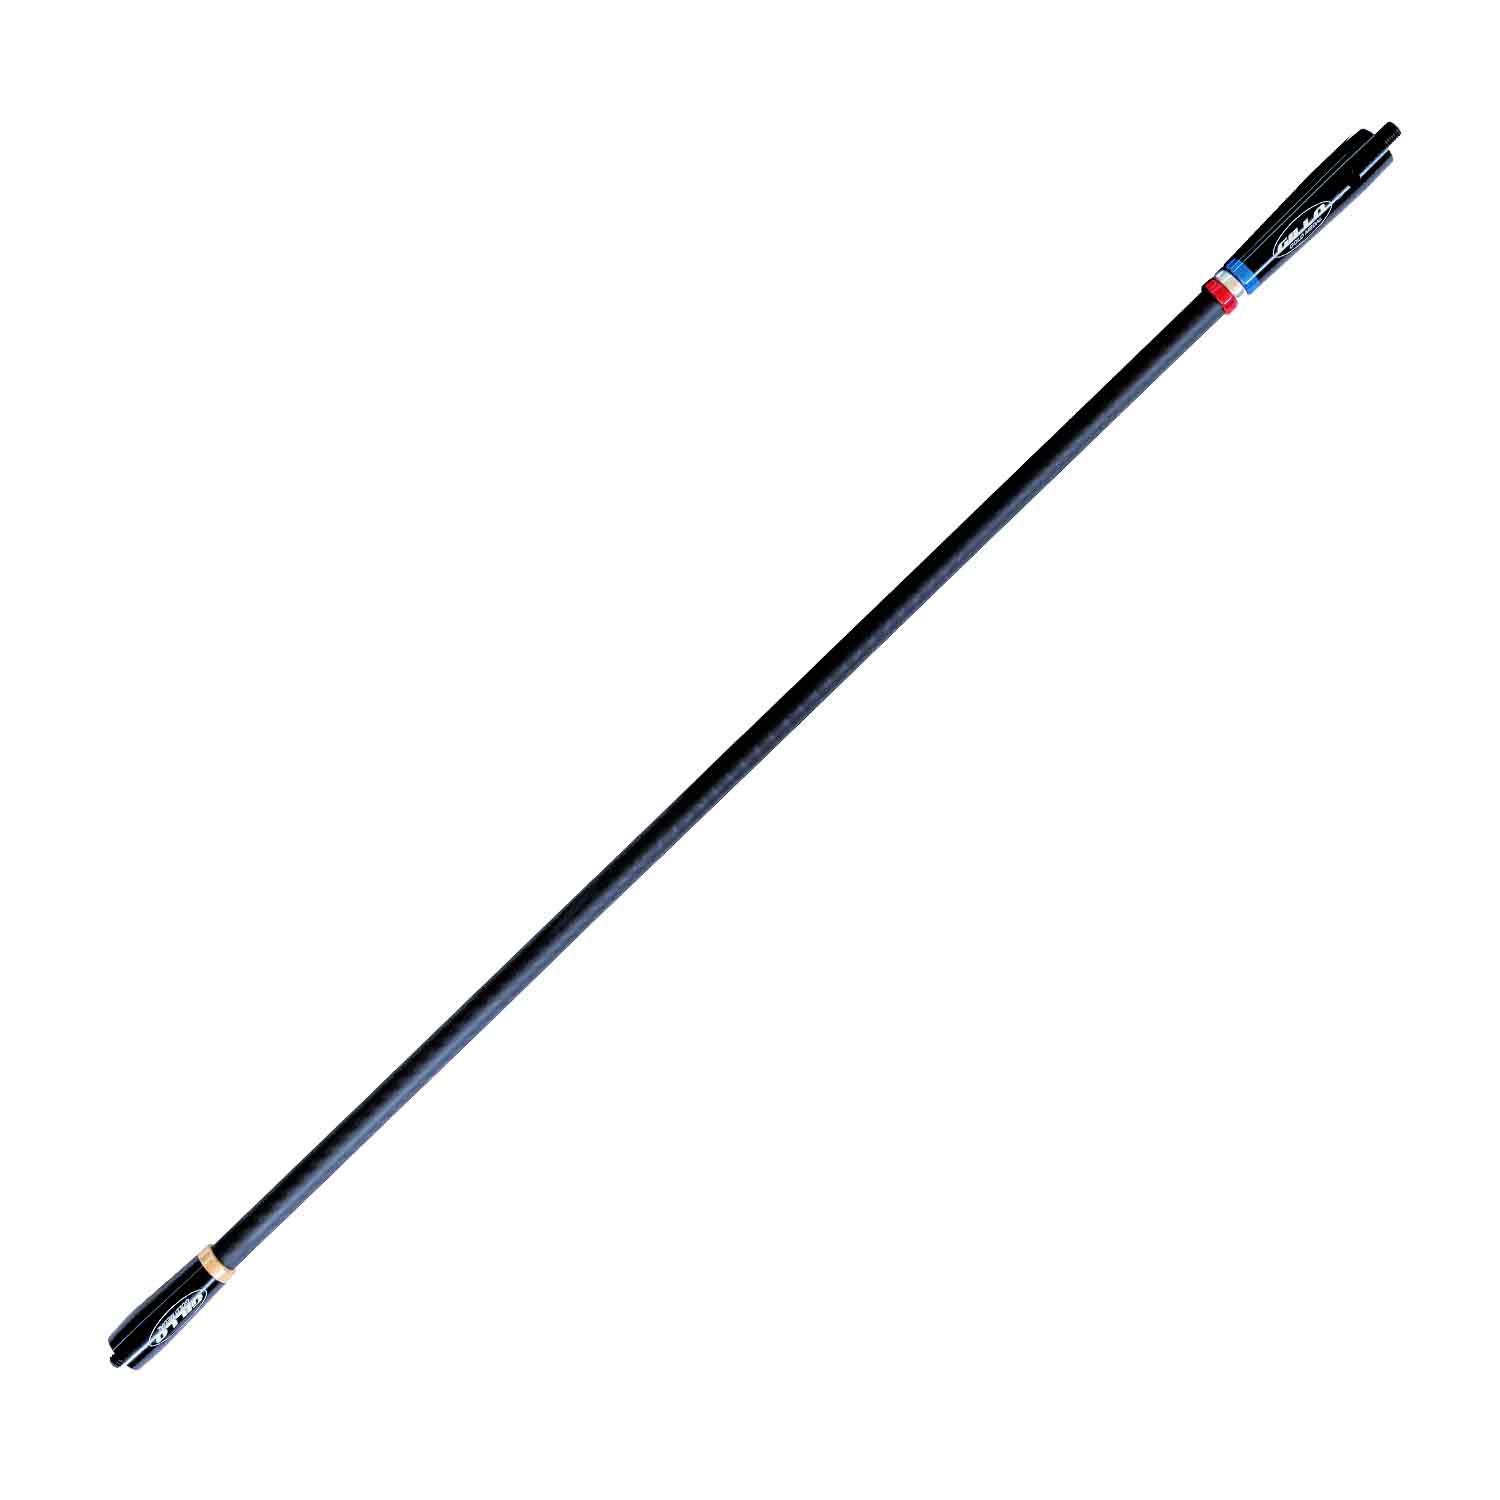 Gillo GS13 Long Rod Carbon Stabilizer